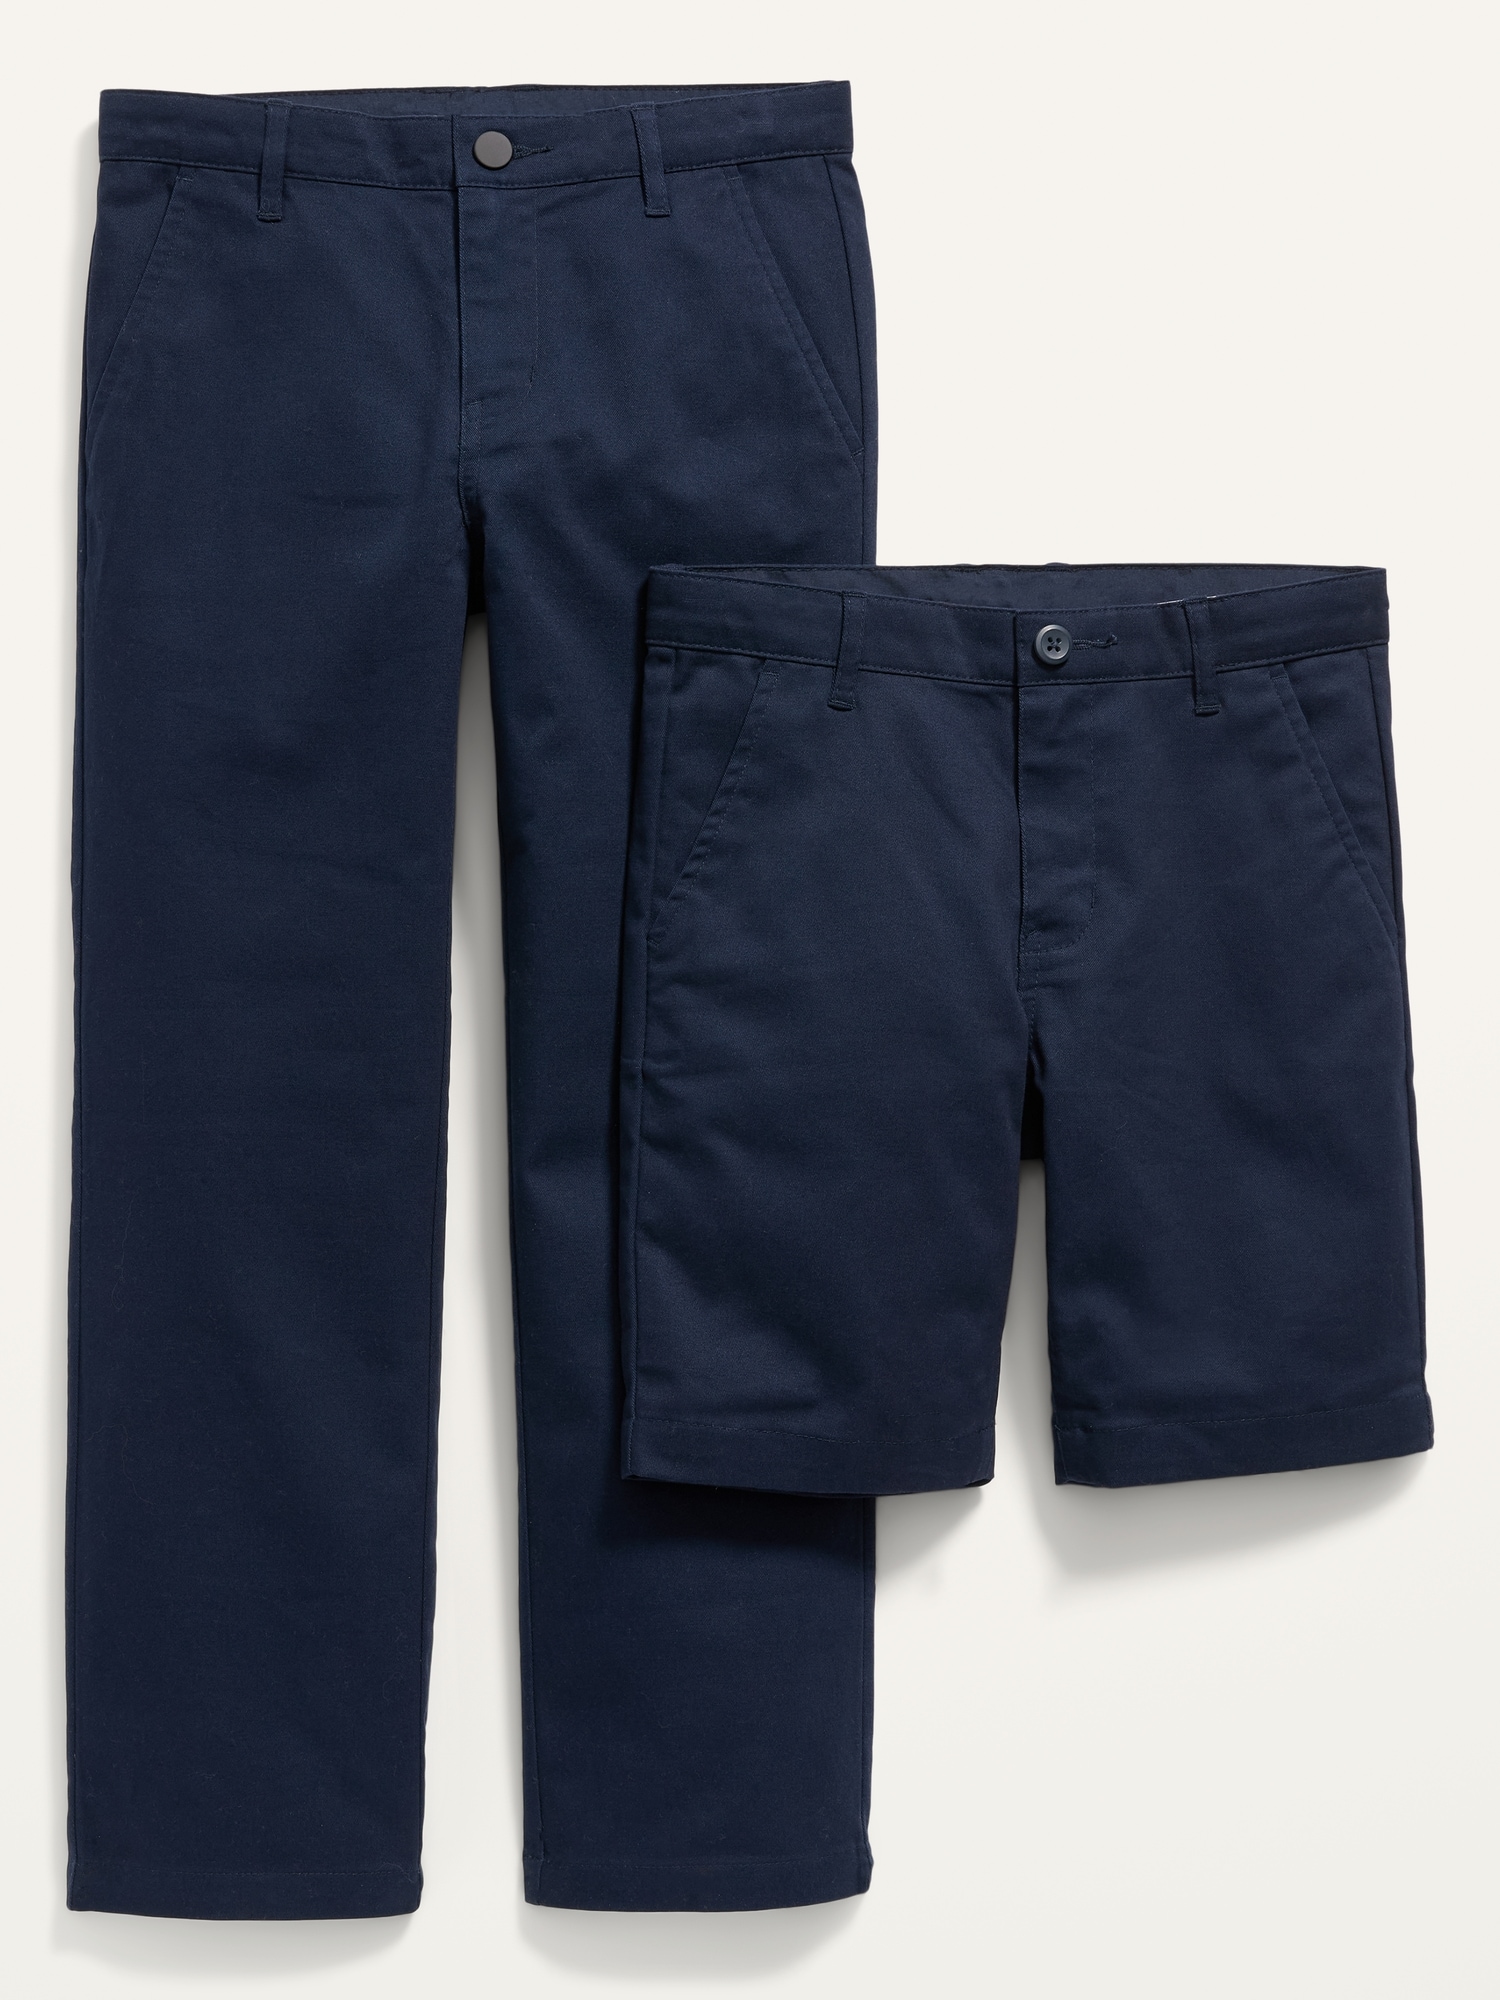 Old Navy Built-In Flex Twill Straight Uniform Shorts For Boys S(8)